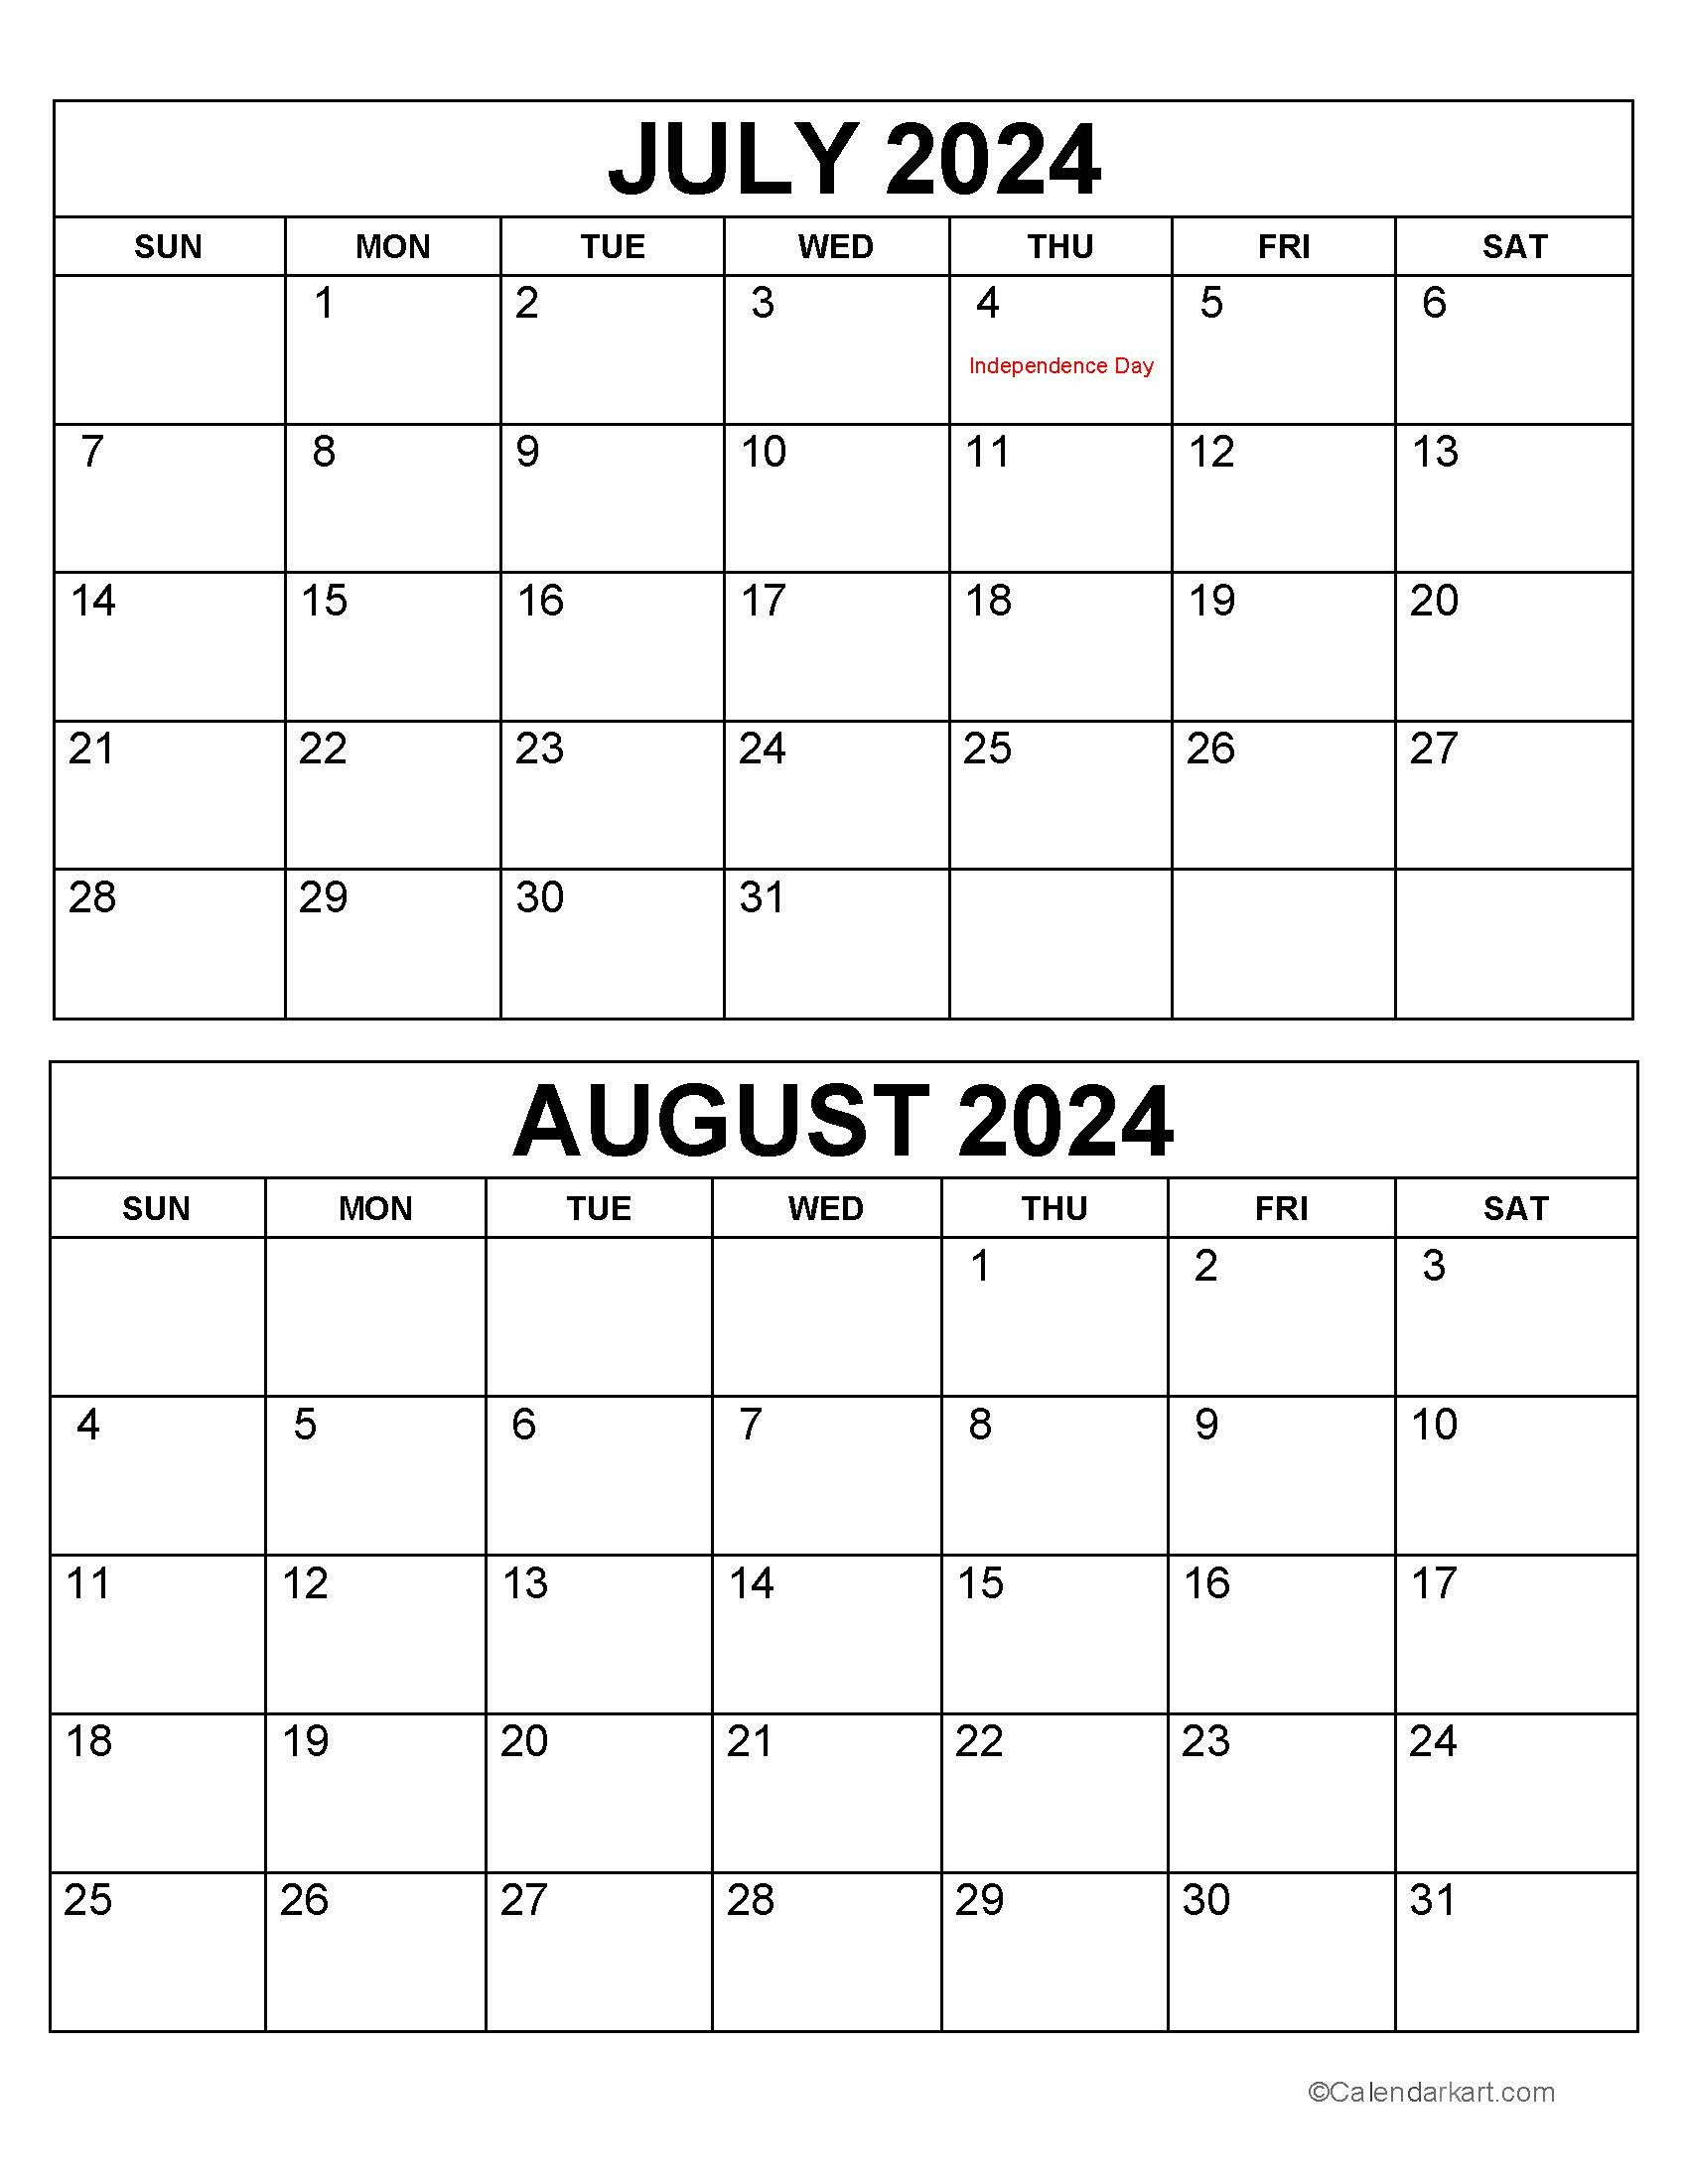 Printable July August 2024 Calendar | Calendarkart within Print June July August 2024 Calendar